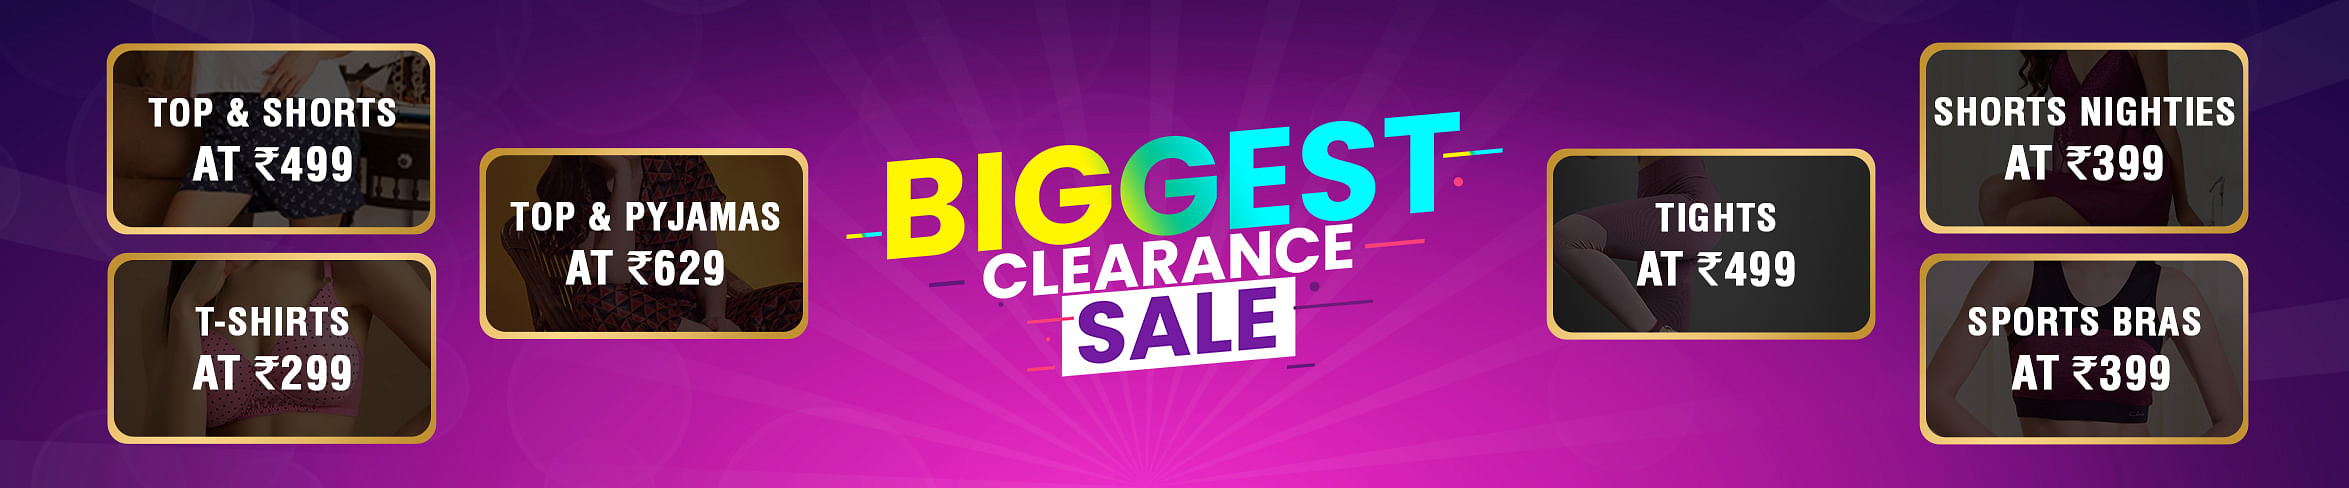 
                            Biggest Clearance Sale Nightwear Activewear